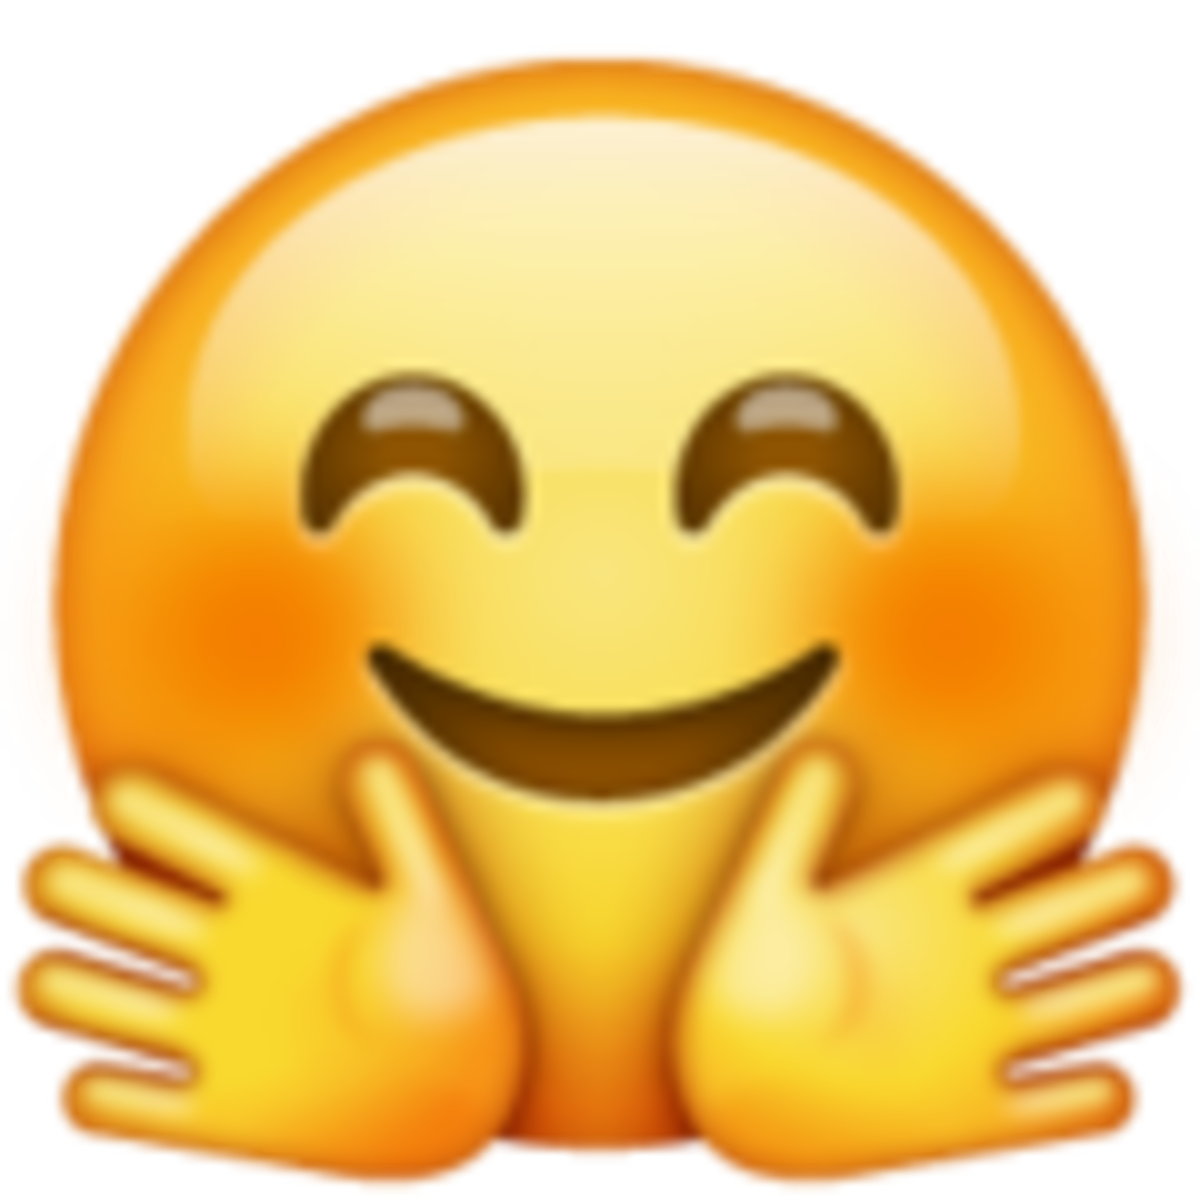 Emoji 1f917, cara sonriente abrazando